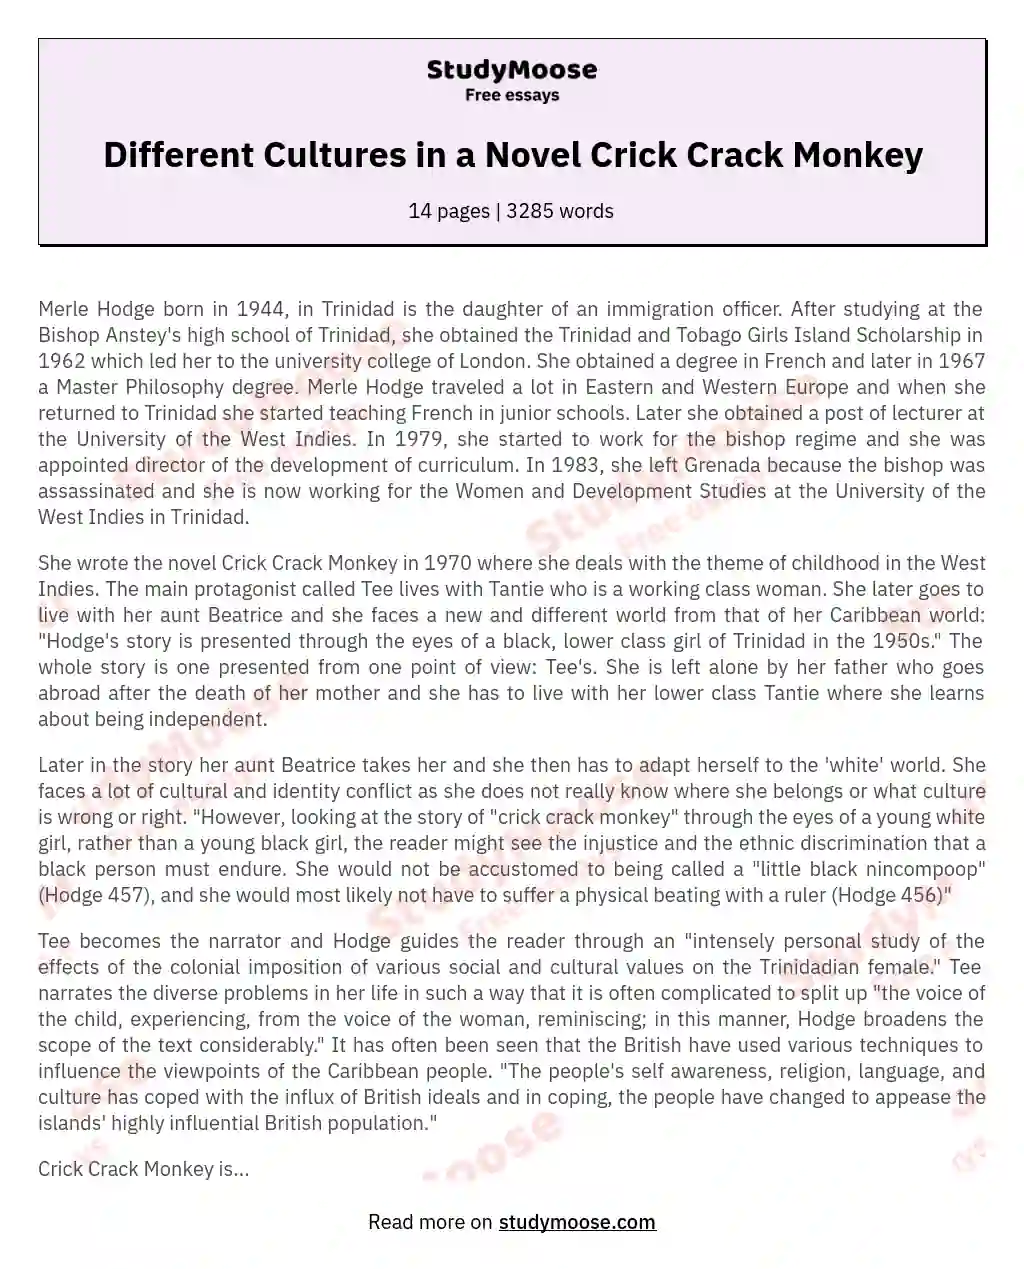 Different Cultures in a Novel Crick Crack Monkey essay